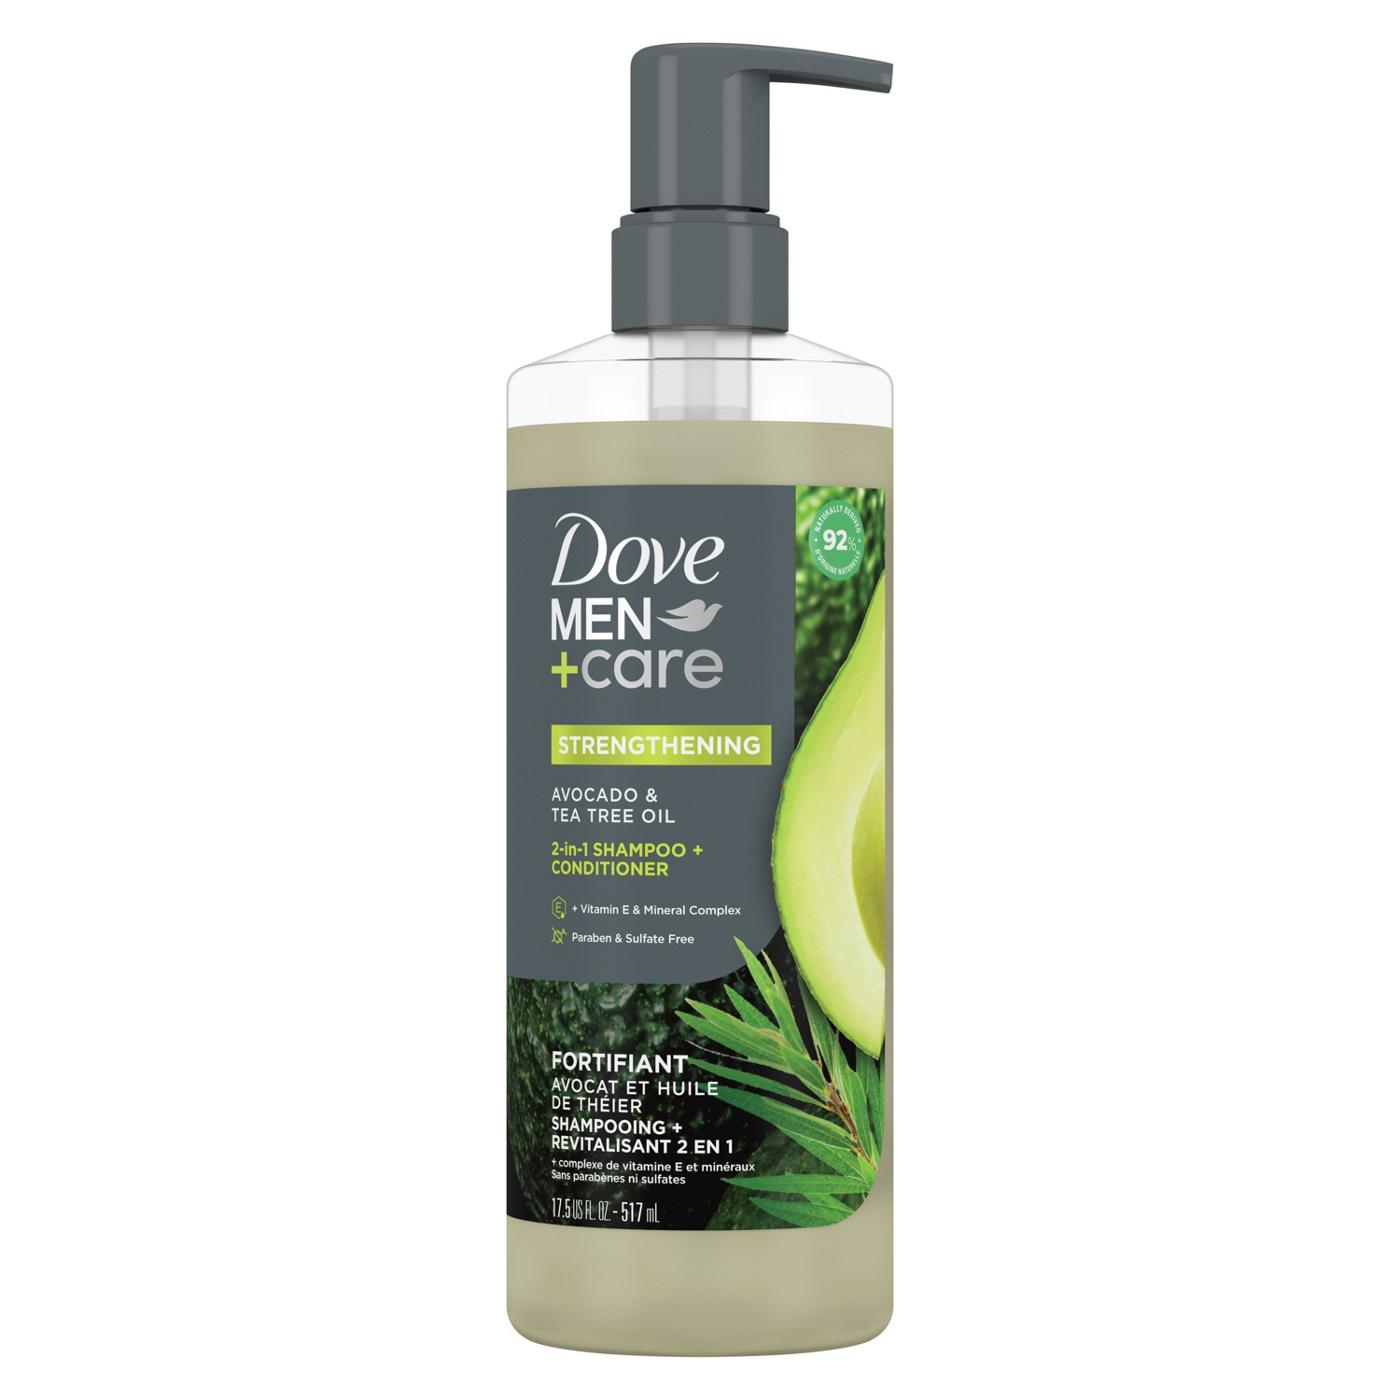 Dove Men+Care Strengthening 2 in 1 Shampoo + Conditioner - Avocado & Tea Tree Oil; image 1 of 5